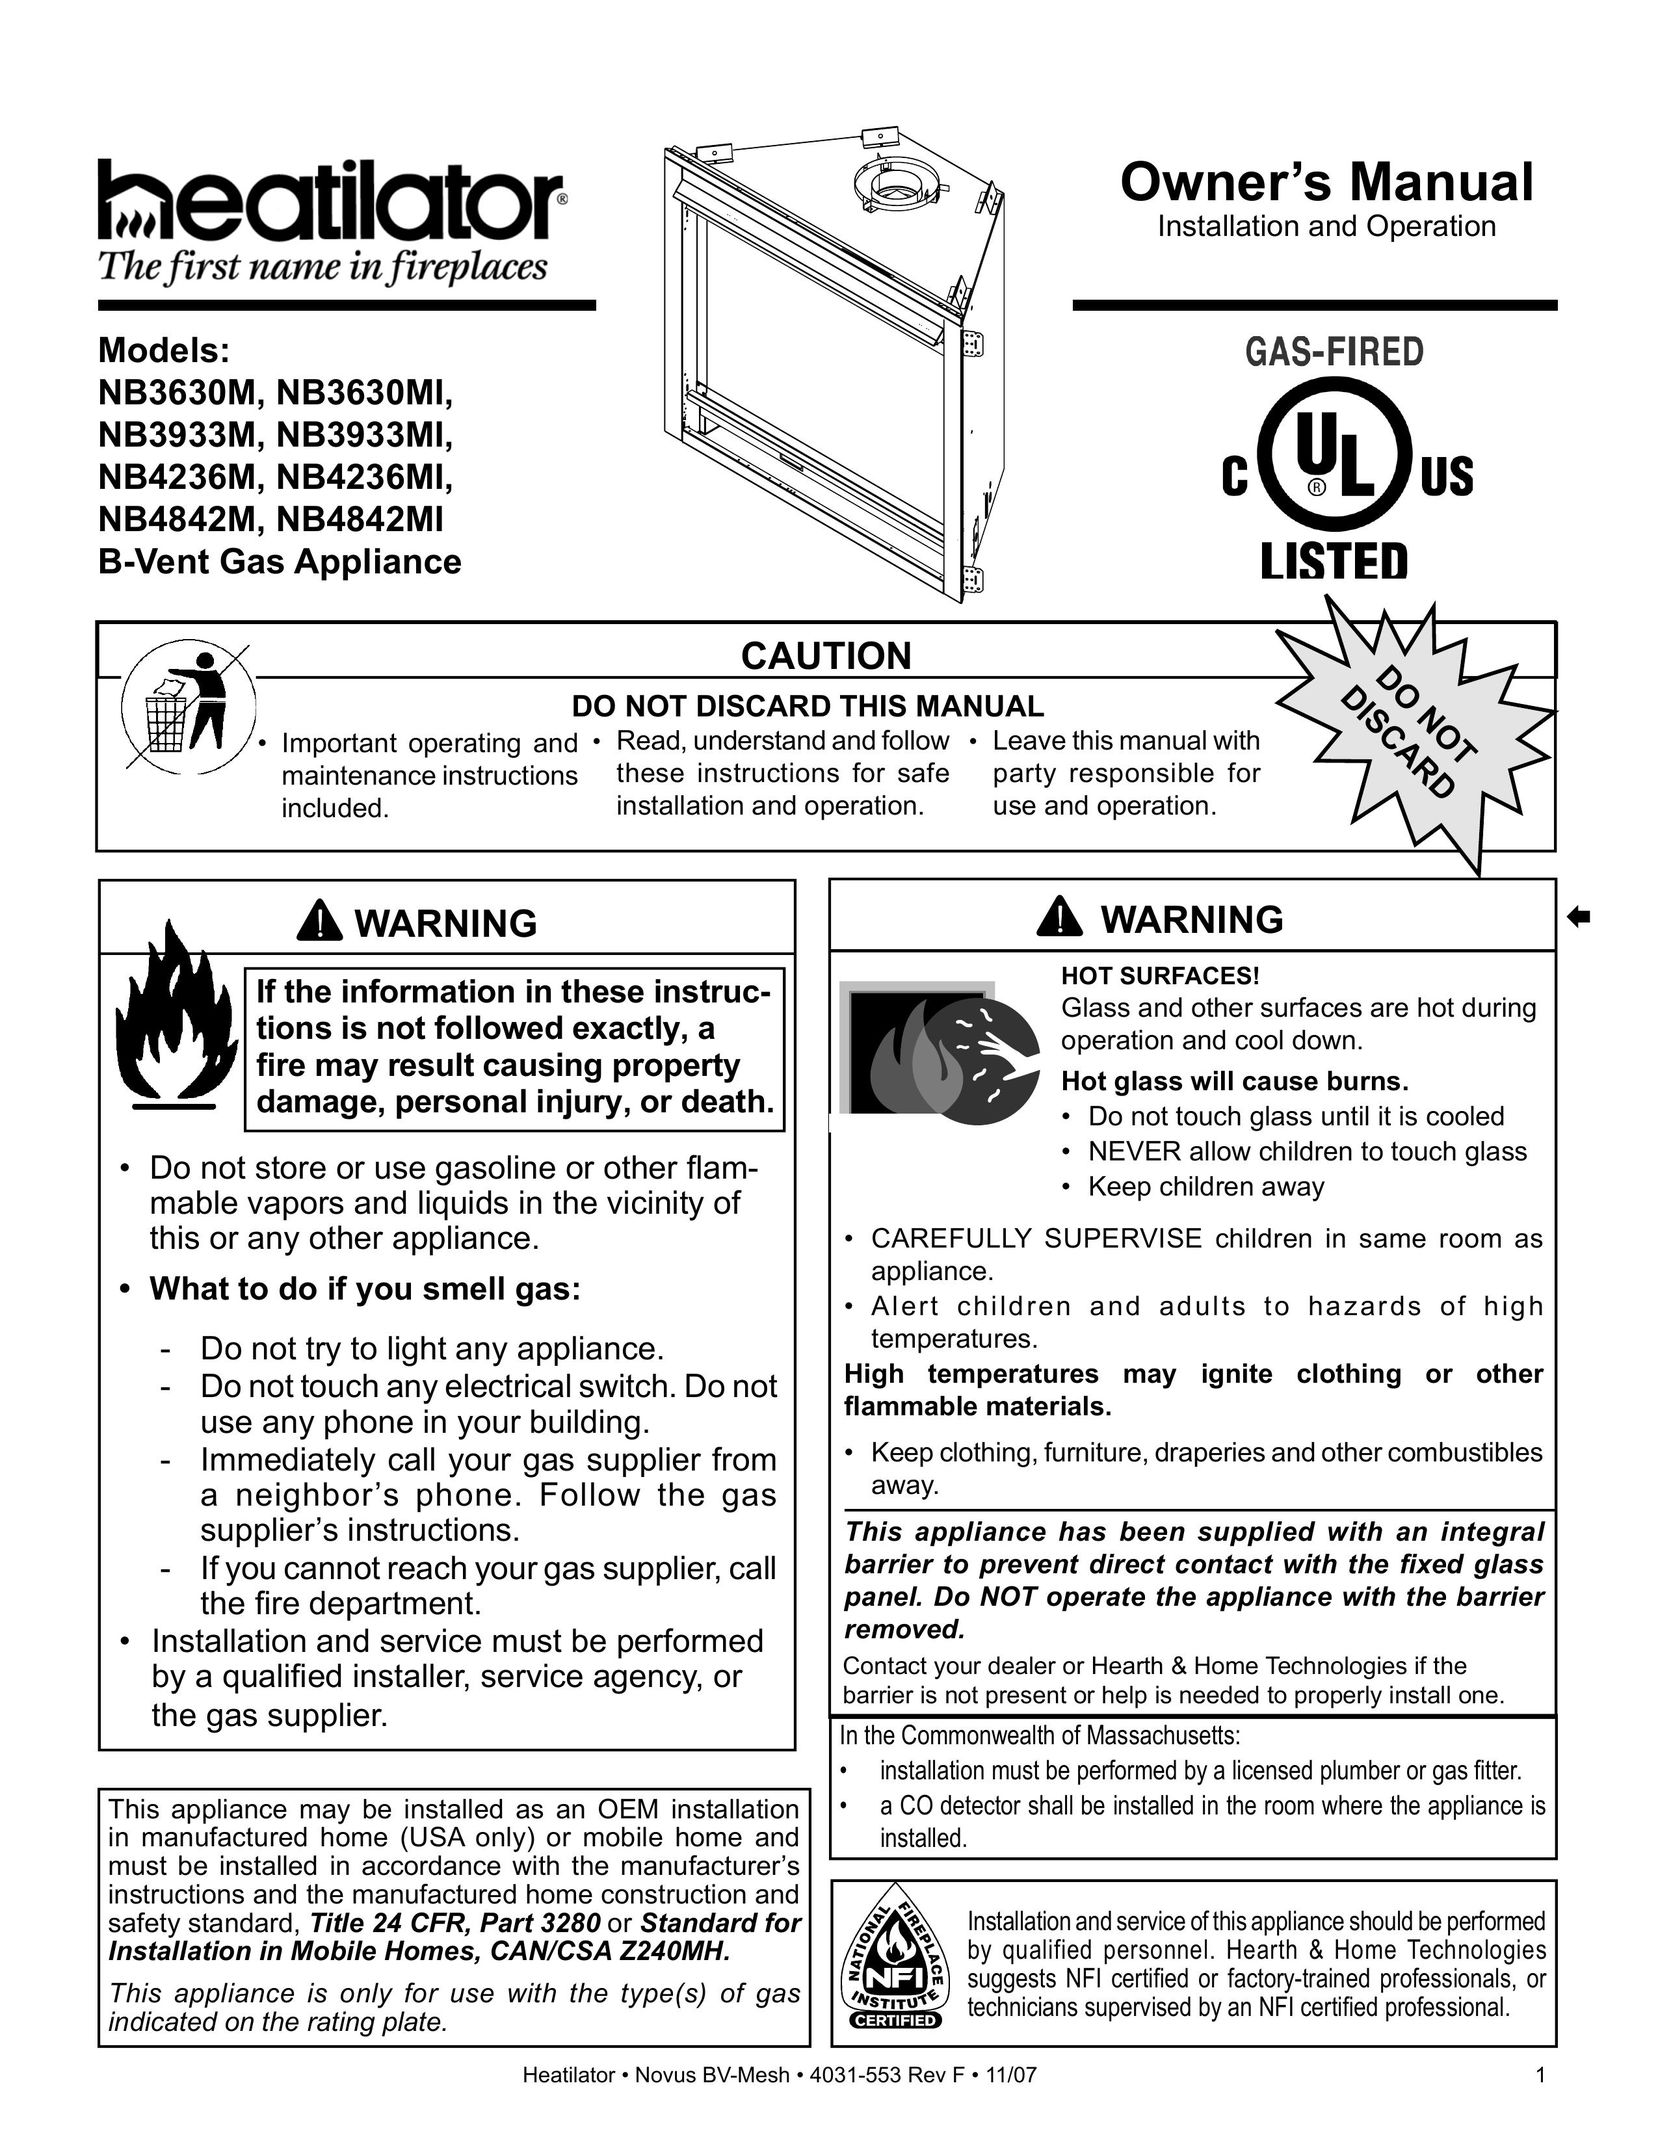 Heatiator NB4842M Indoor Fireplace User Manual